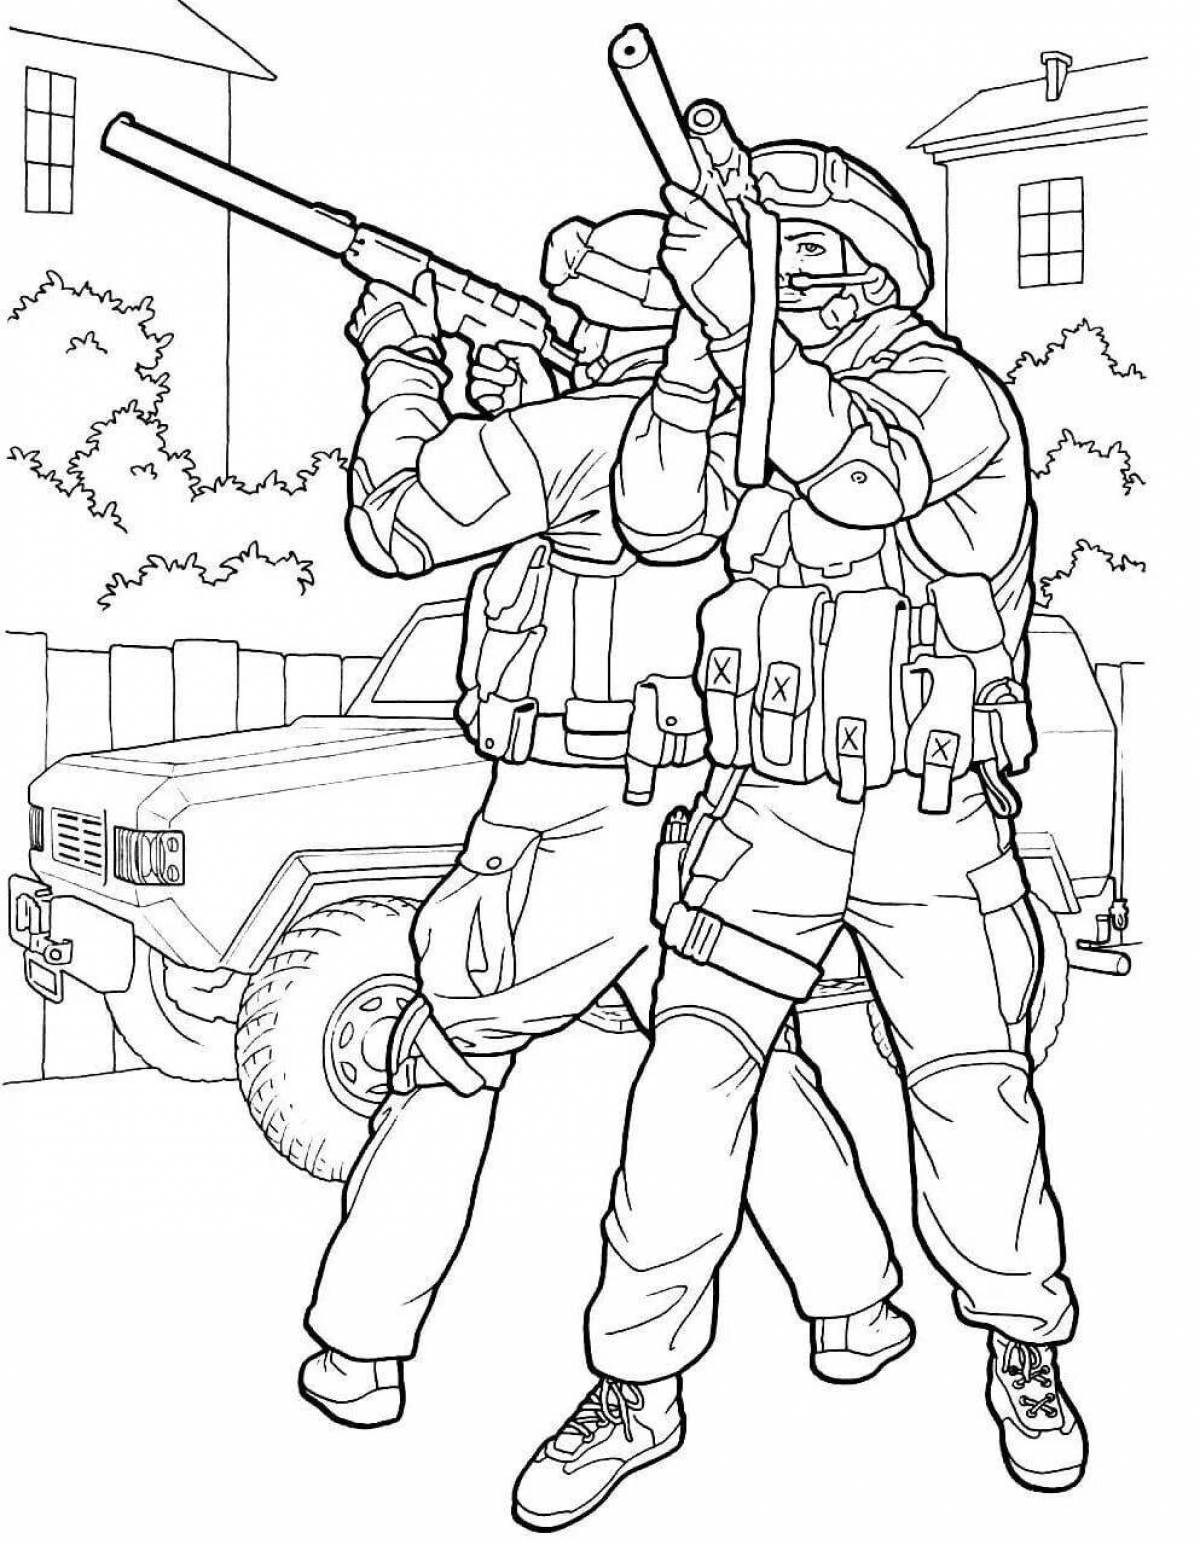 Commando coloring - heroic